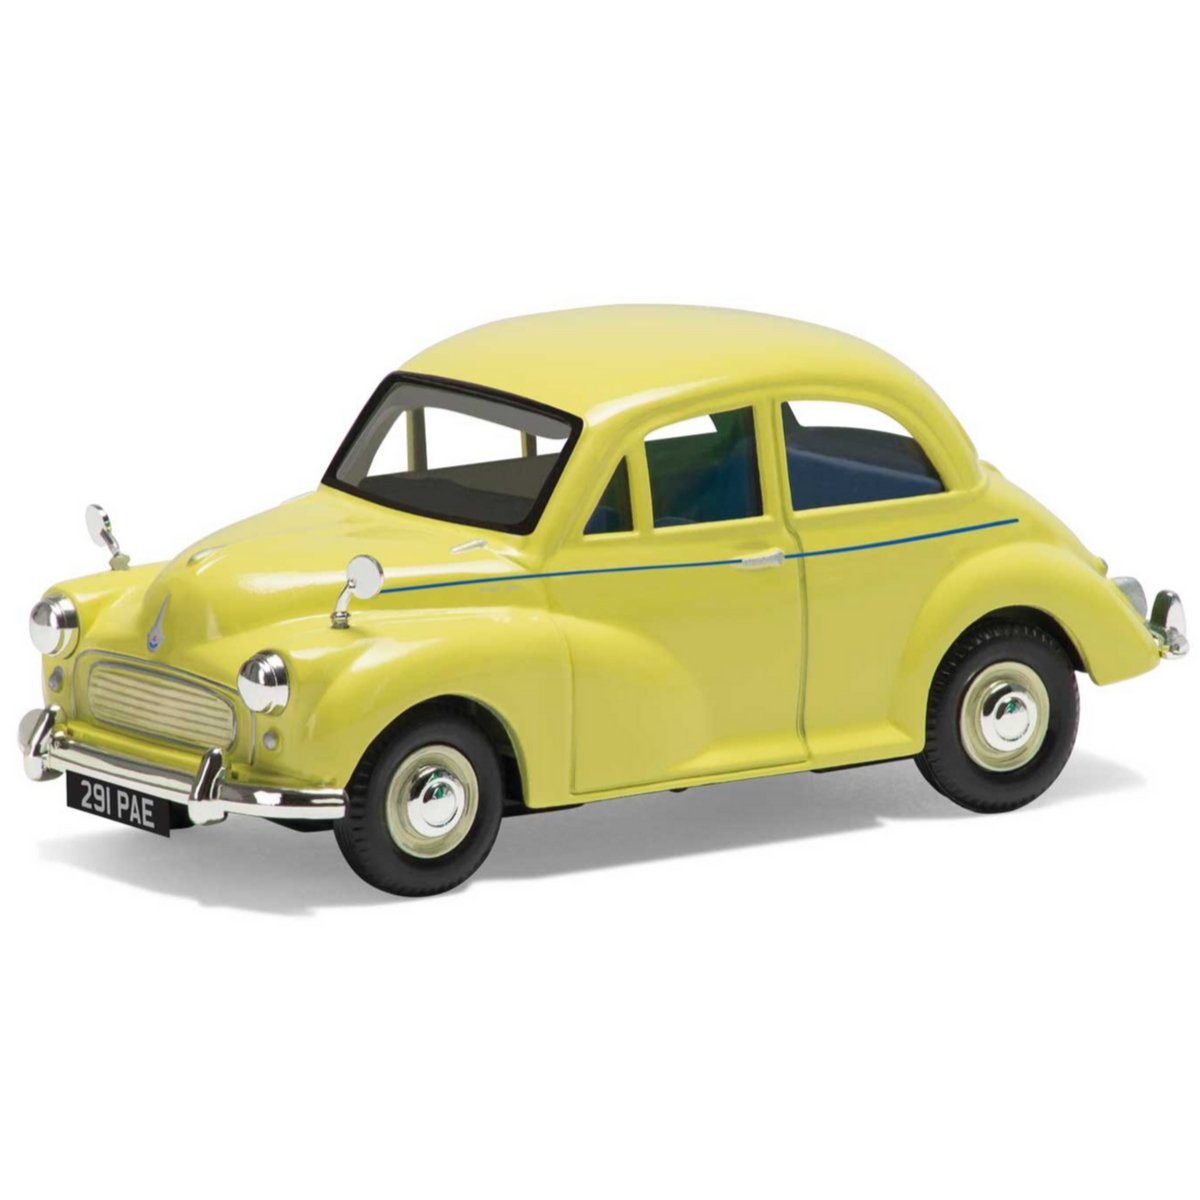 Corgi VA05808 Morris Minor 1000, Highway Yellow - 60th Anniversary Collection - Phillips Hobbies